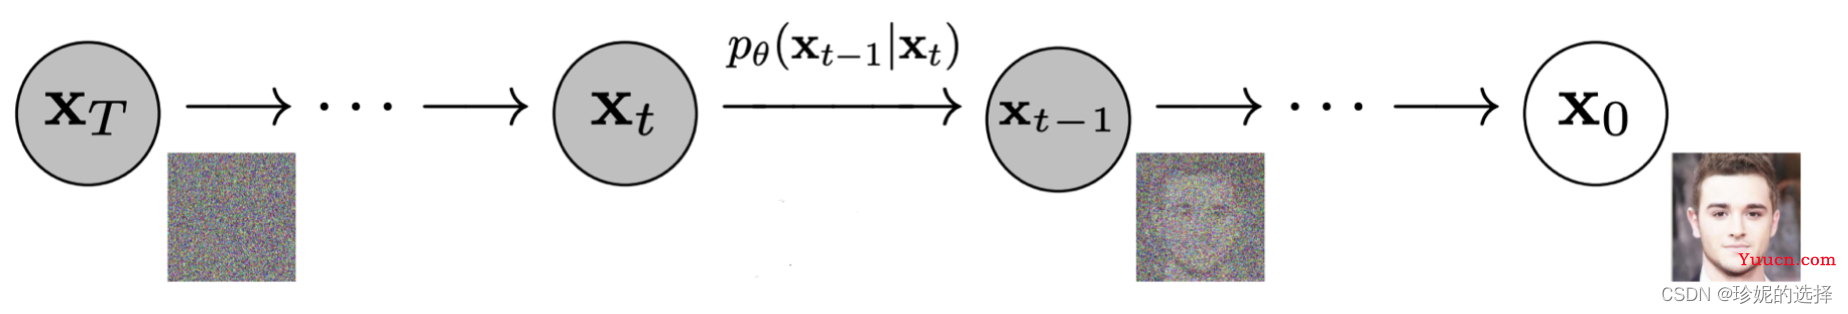 扩散模型 (Diffusion Model) 简要介绍与源码分析